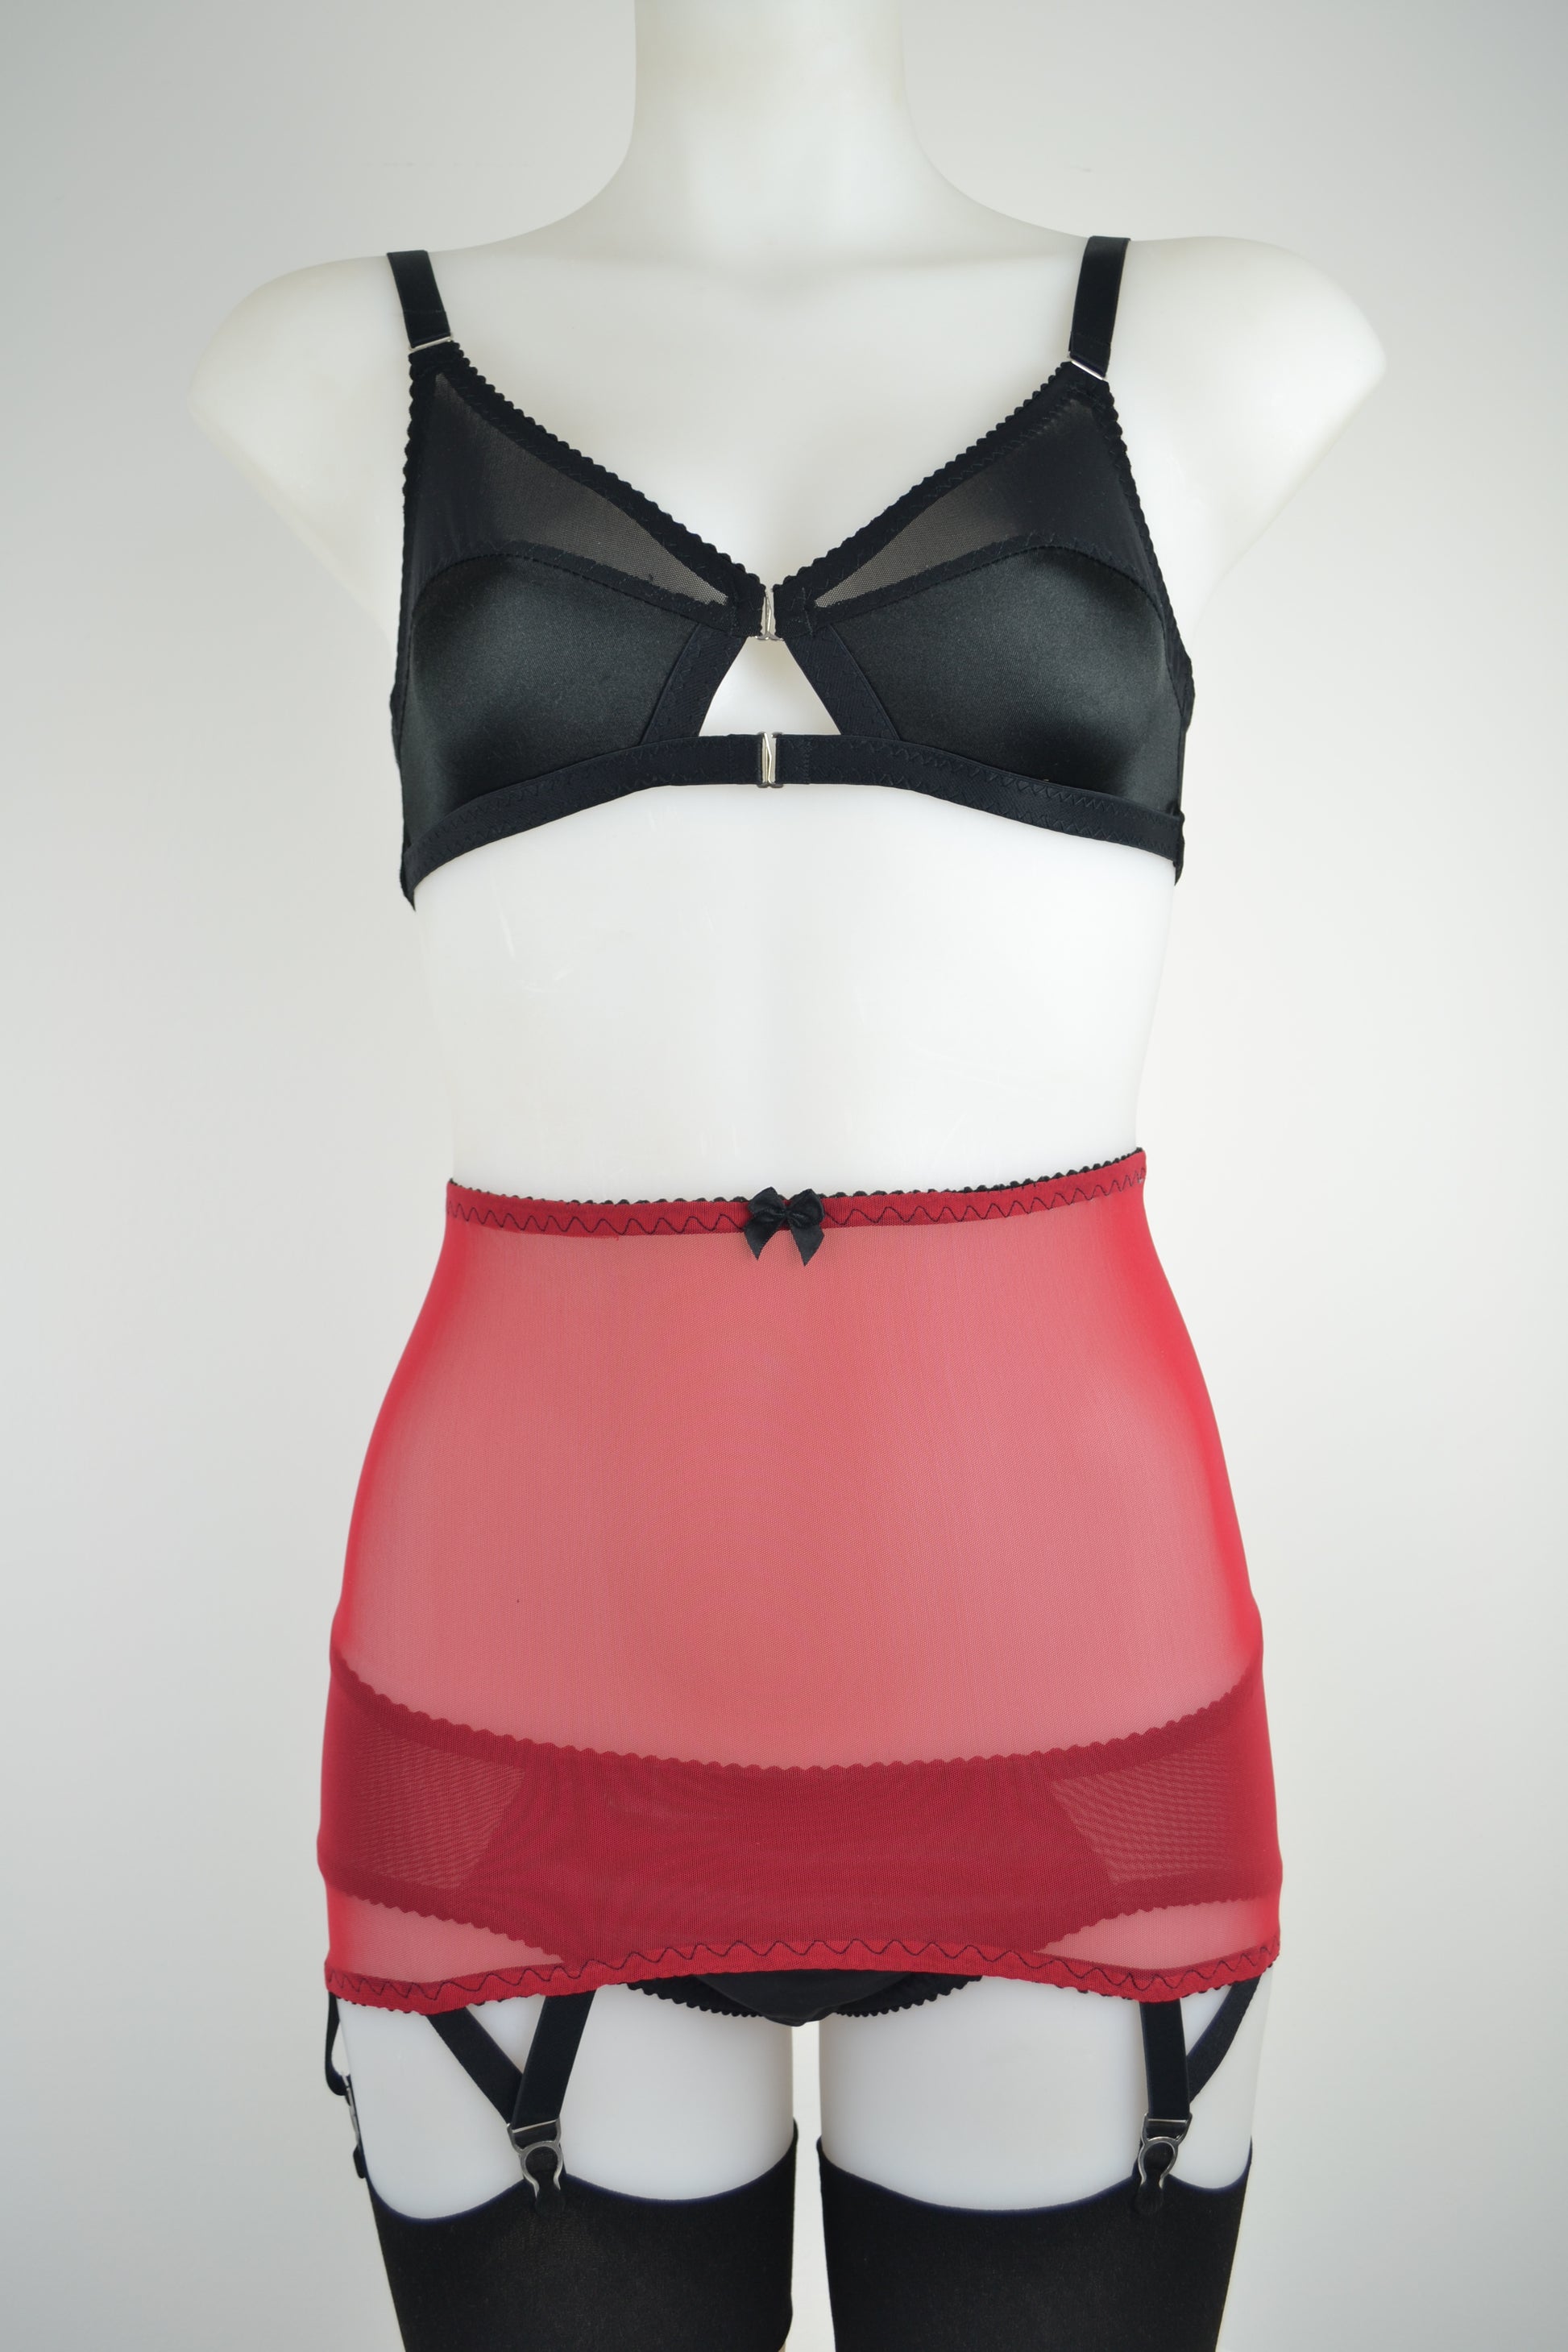 Pin-up Girdle Red & Black Lace Open Bottom Girdle Garter Skirt